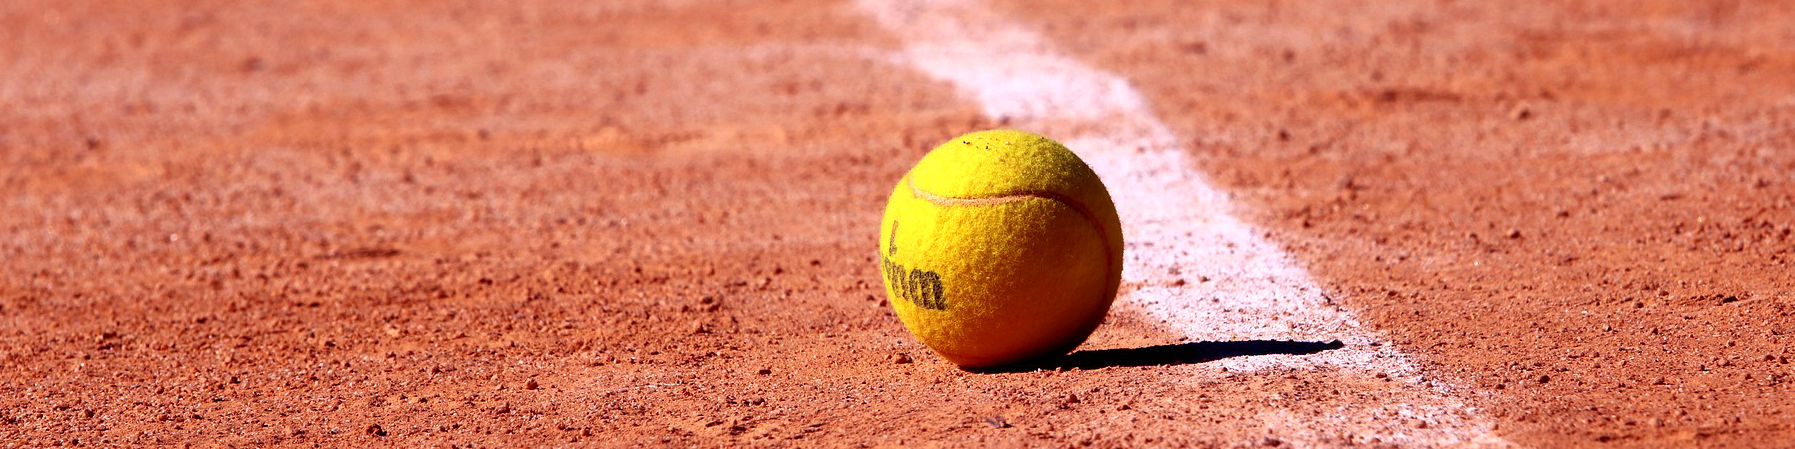 Bild: Tennisbald auf rotem Sandplatz